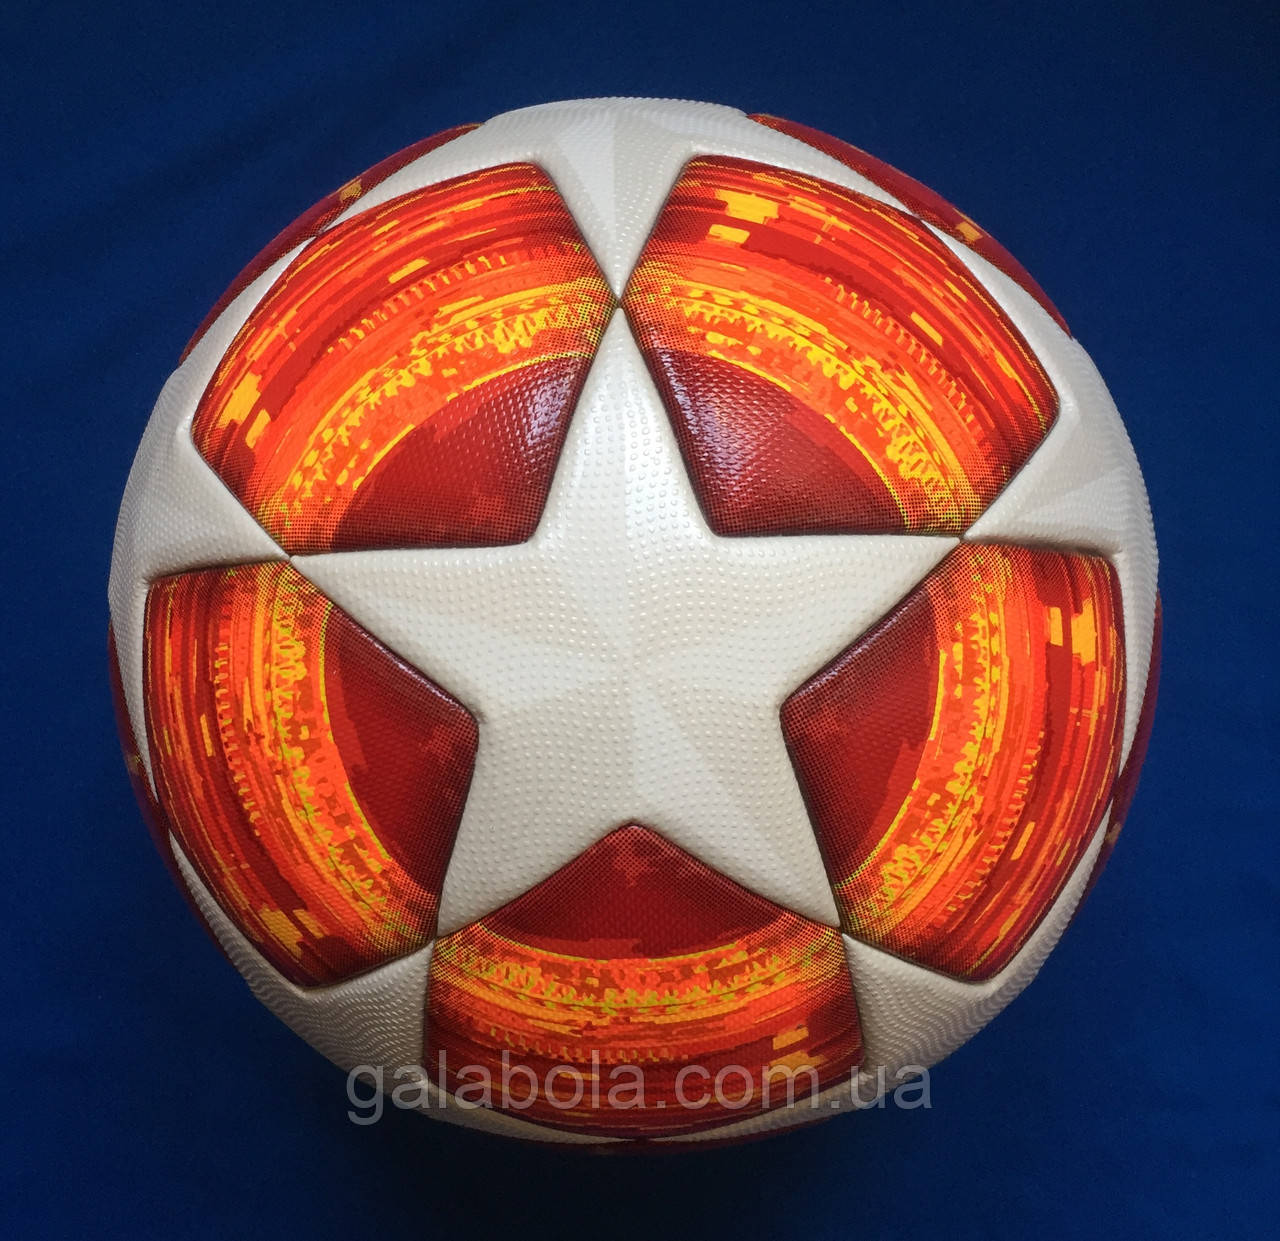 Мяч футбольный Adidas Finale Madrid DN8685 (размер 5), цена 3600 ₴ — Prom.ua (ID#872001984)